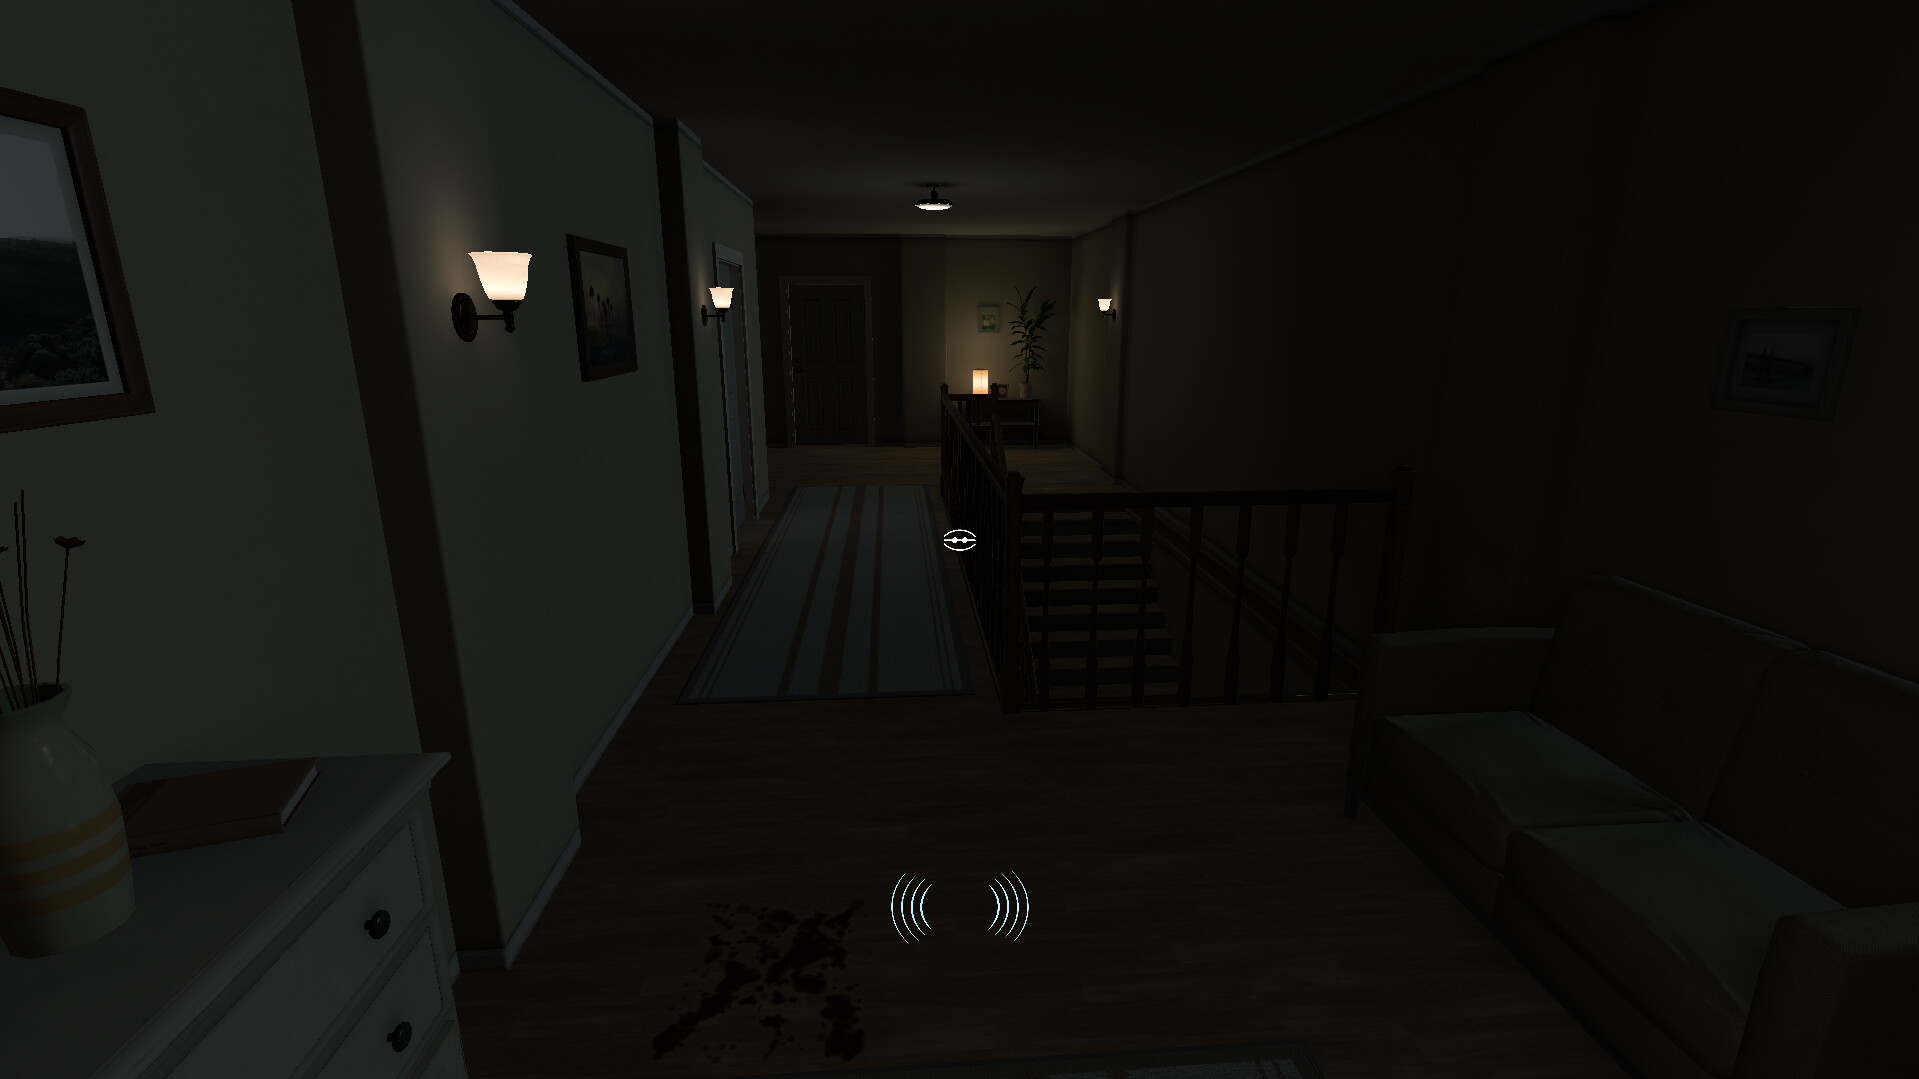 3D心理恐怖遊戲《Serial Victims》上架STEAM